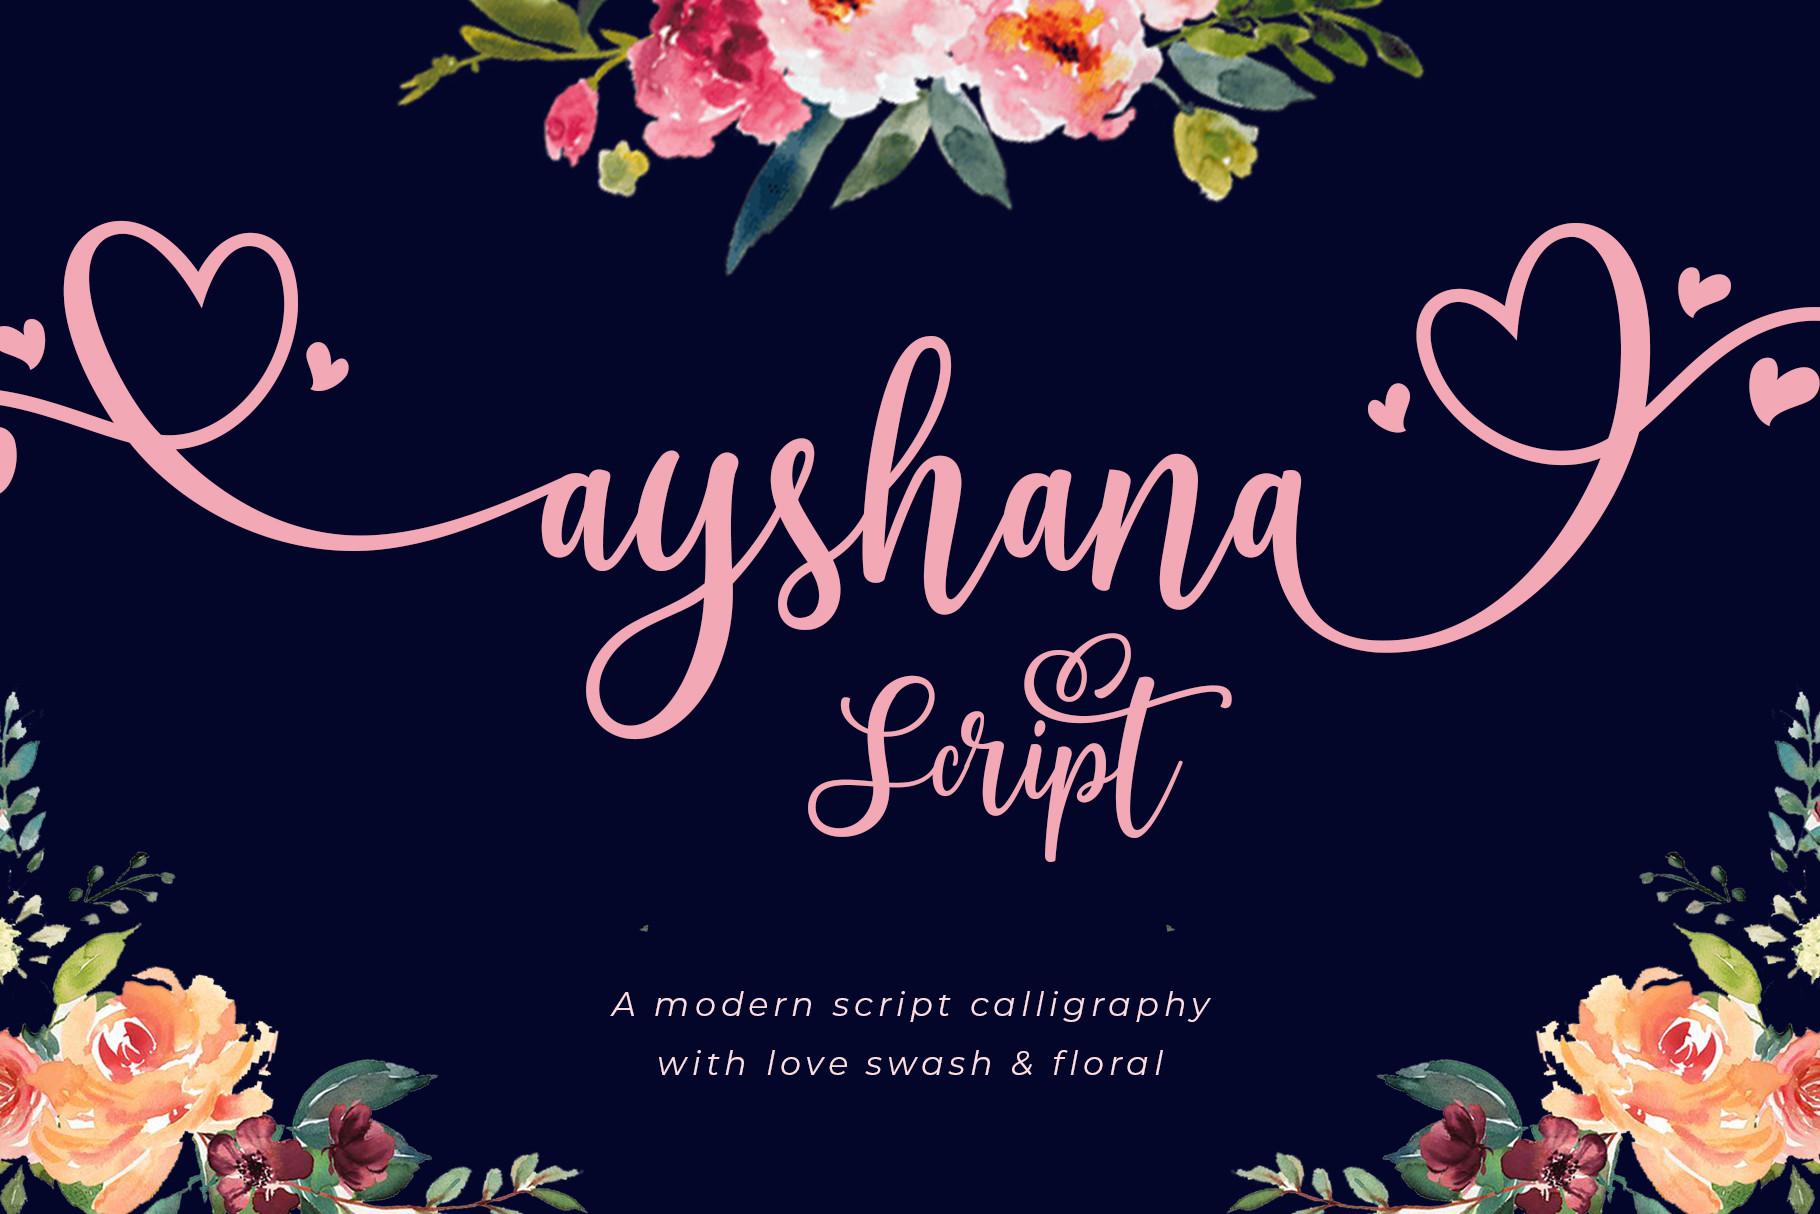 Ayshana Script Font